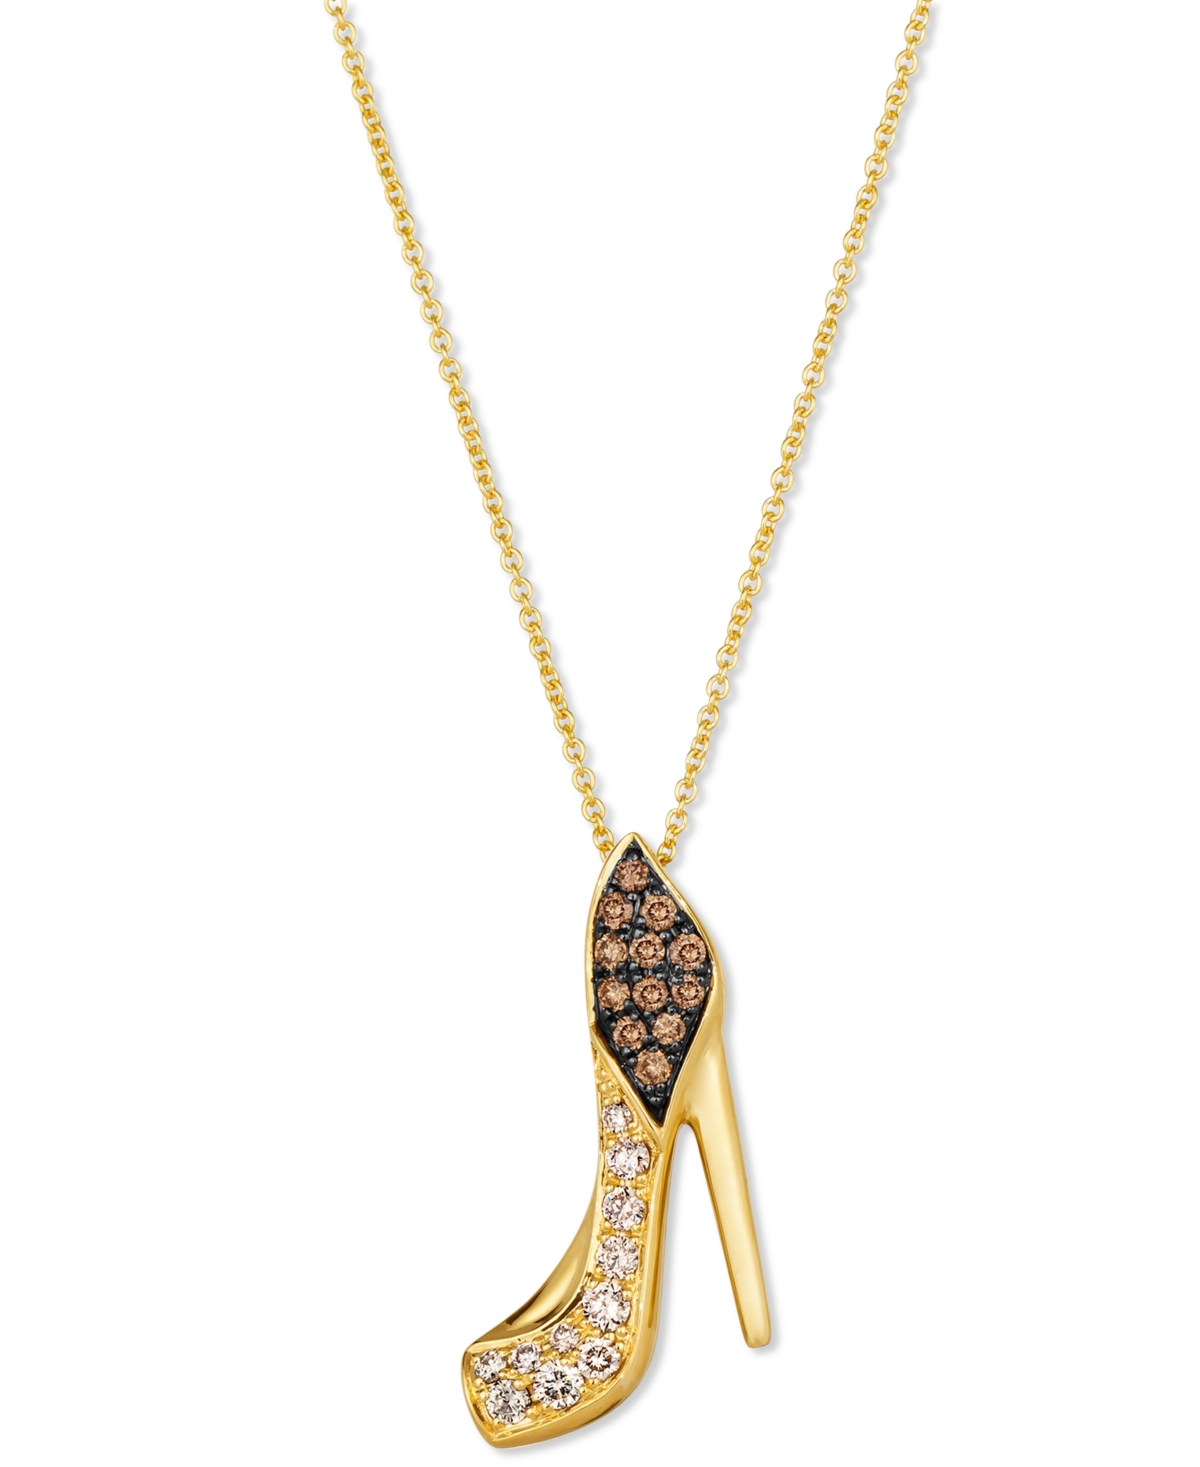 Chocolate Diamond & Nude Diamond High Heel Shoe Pendant Necklace (3/8 ct. t.w.) in 14k Gold, 18" + 2" extender - K Honey Gold Pendant